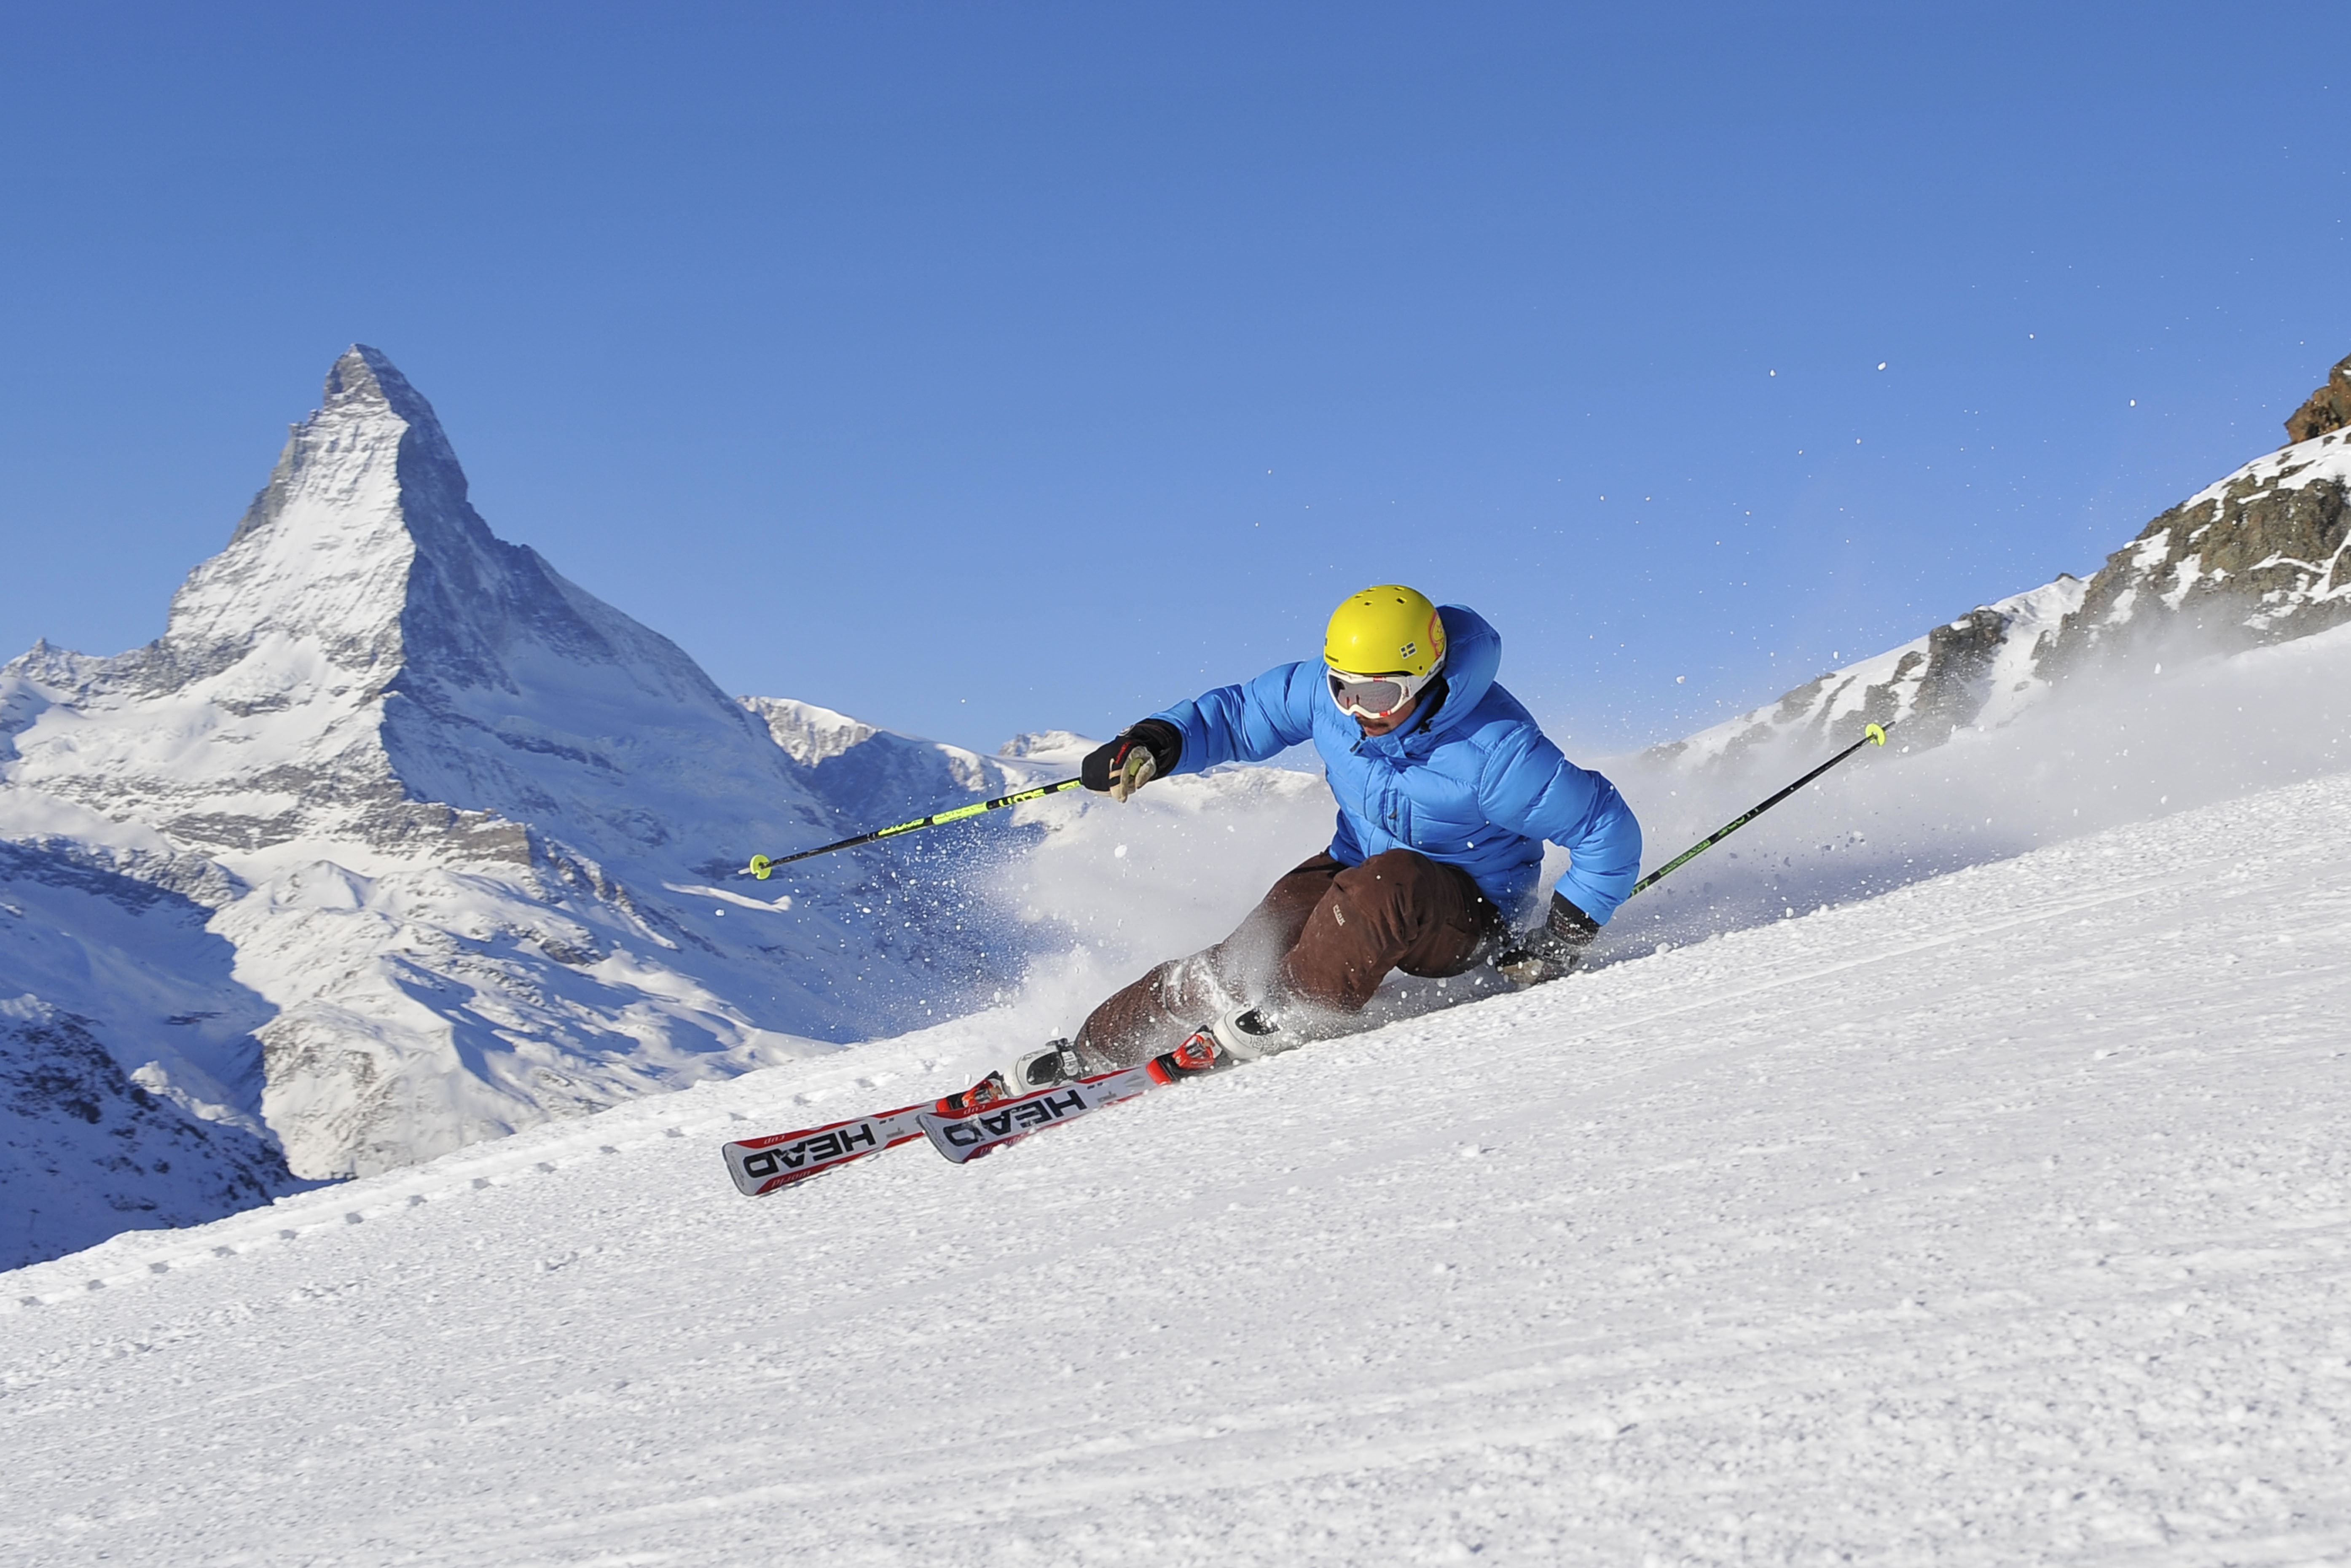 Great skiing. Домбай горнолыжный курорт. Церматт Швейцария сноубордисты. Лыжник в горах. Лыжник на горе.